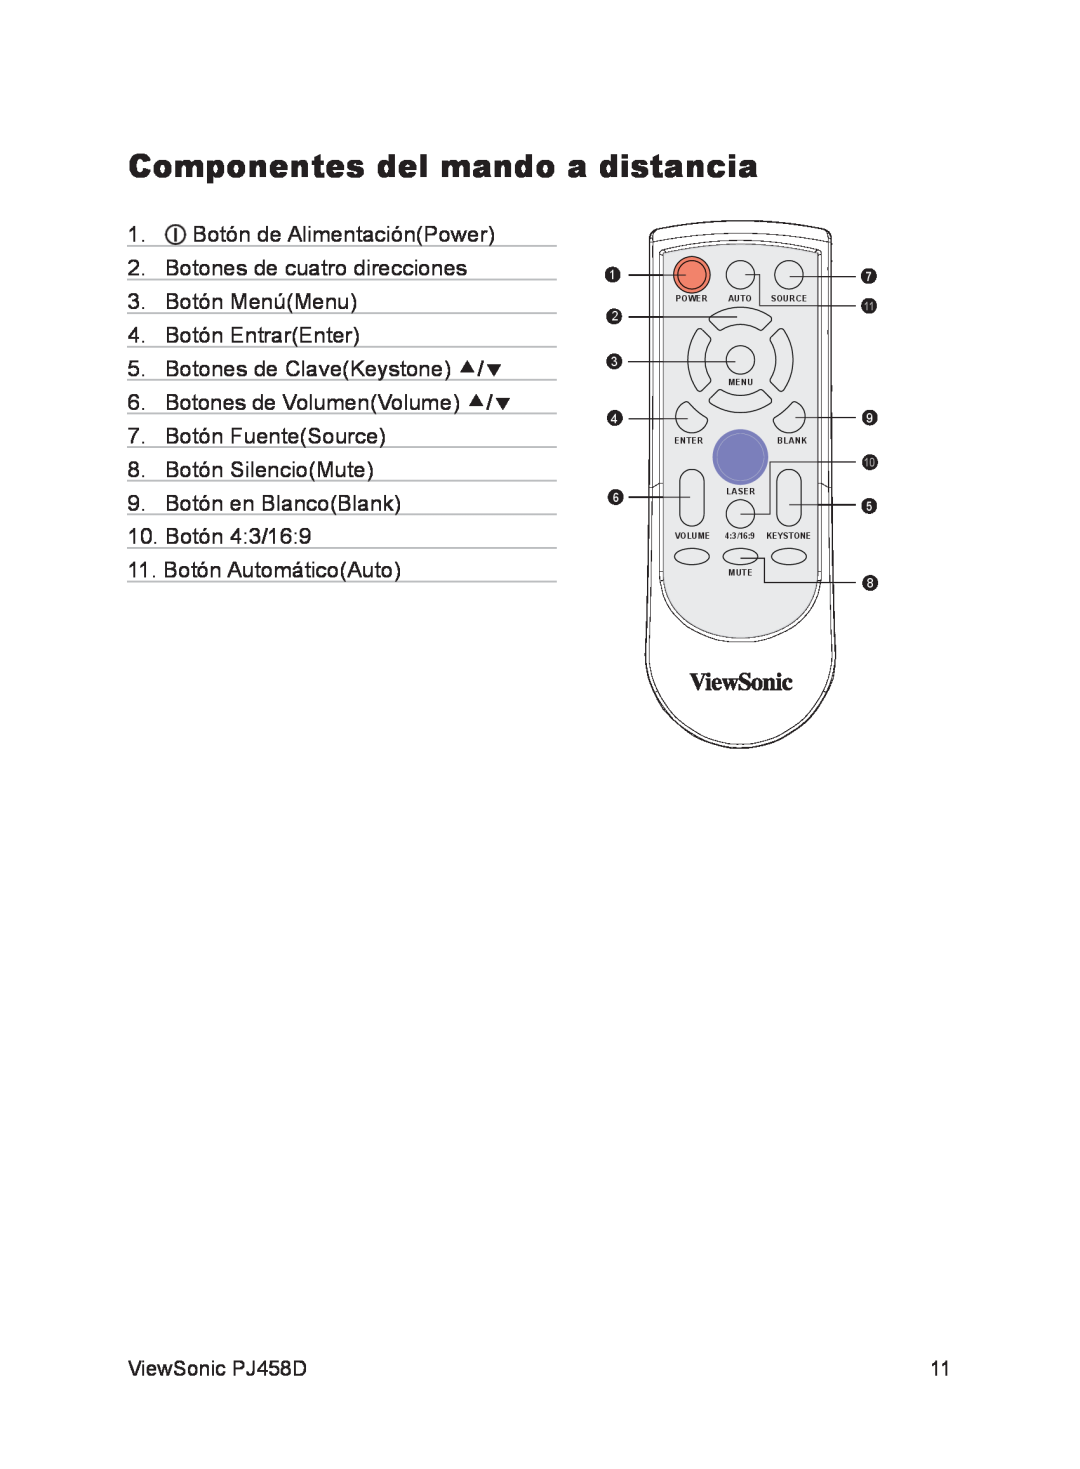 ViewSonic VS10872 manual Componentes del mando a distancia 